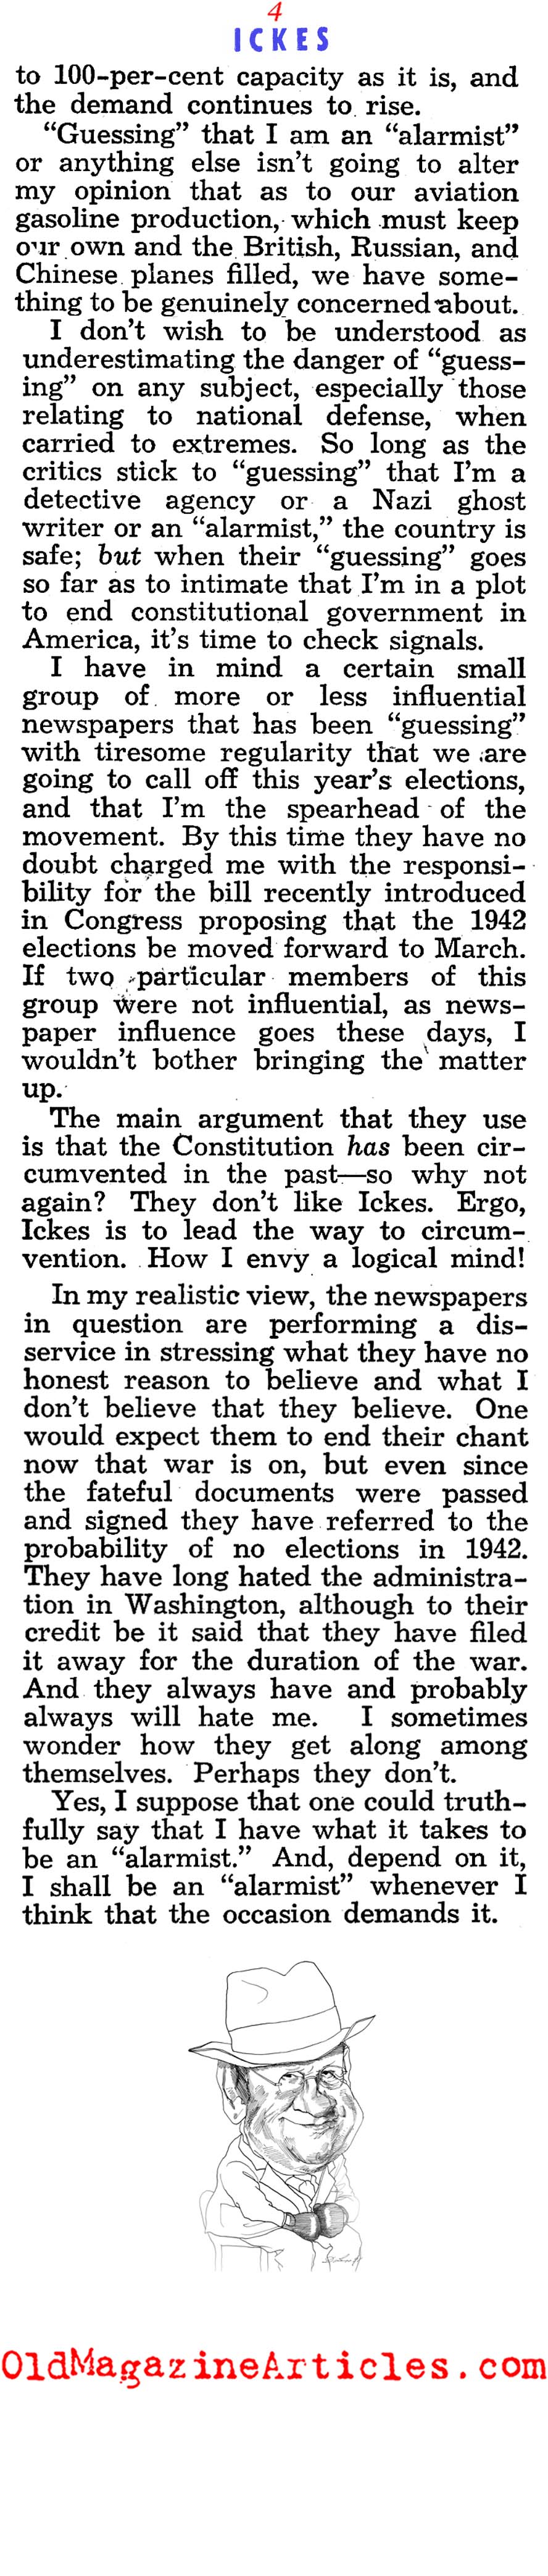 Harold Ickes: FDR's Gas Czar (Liberty Magazine, 1942)